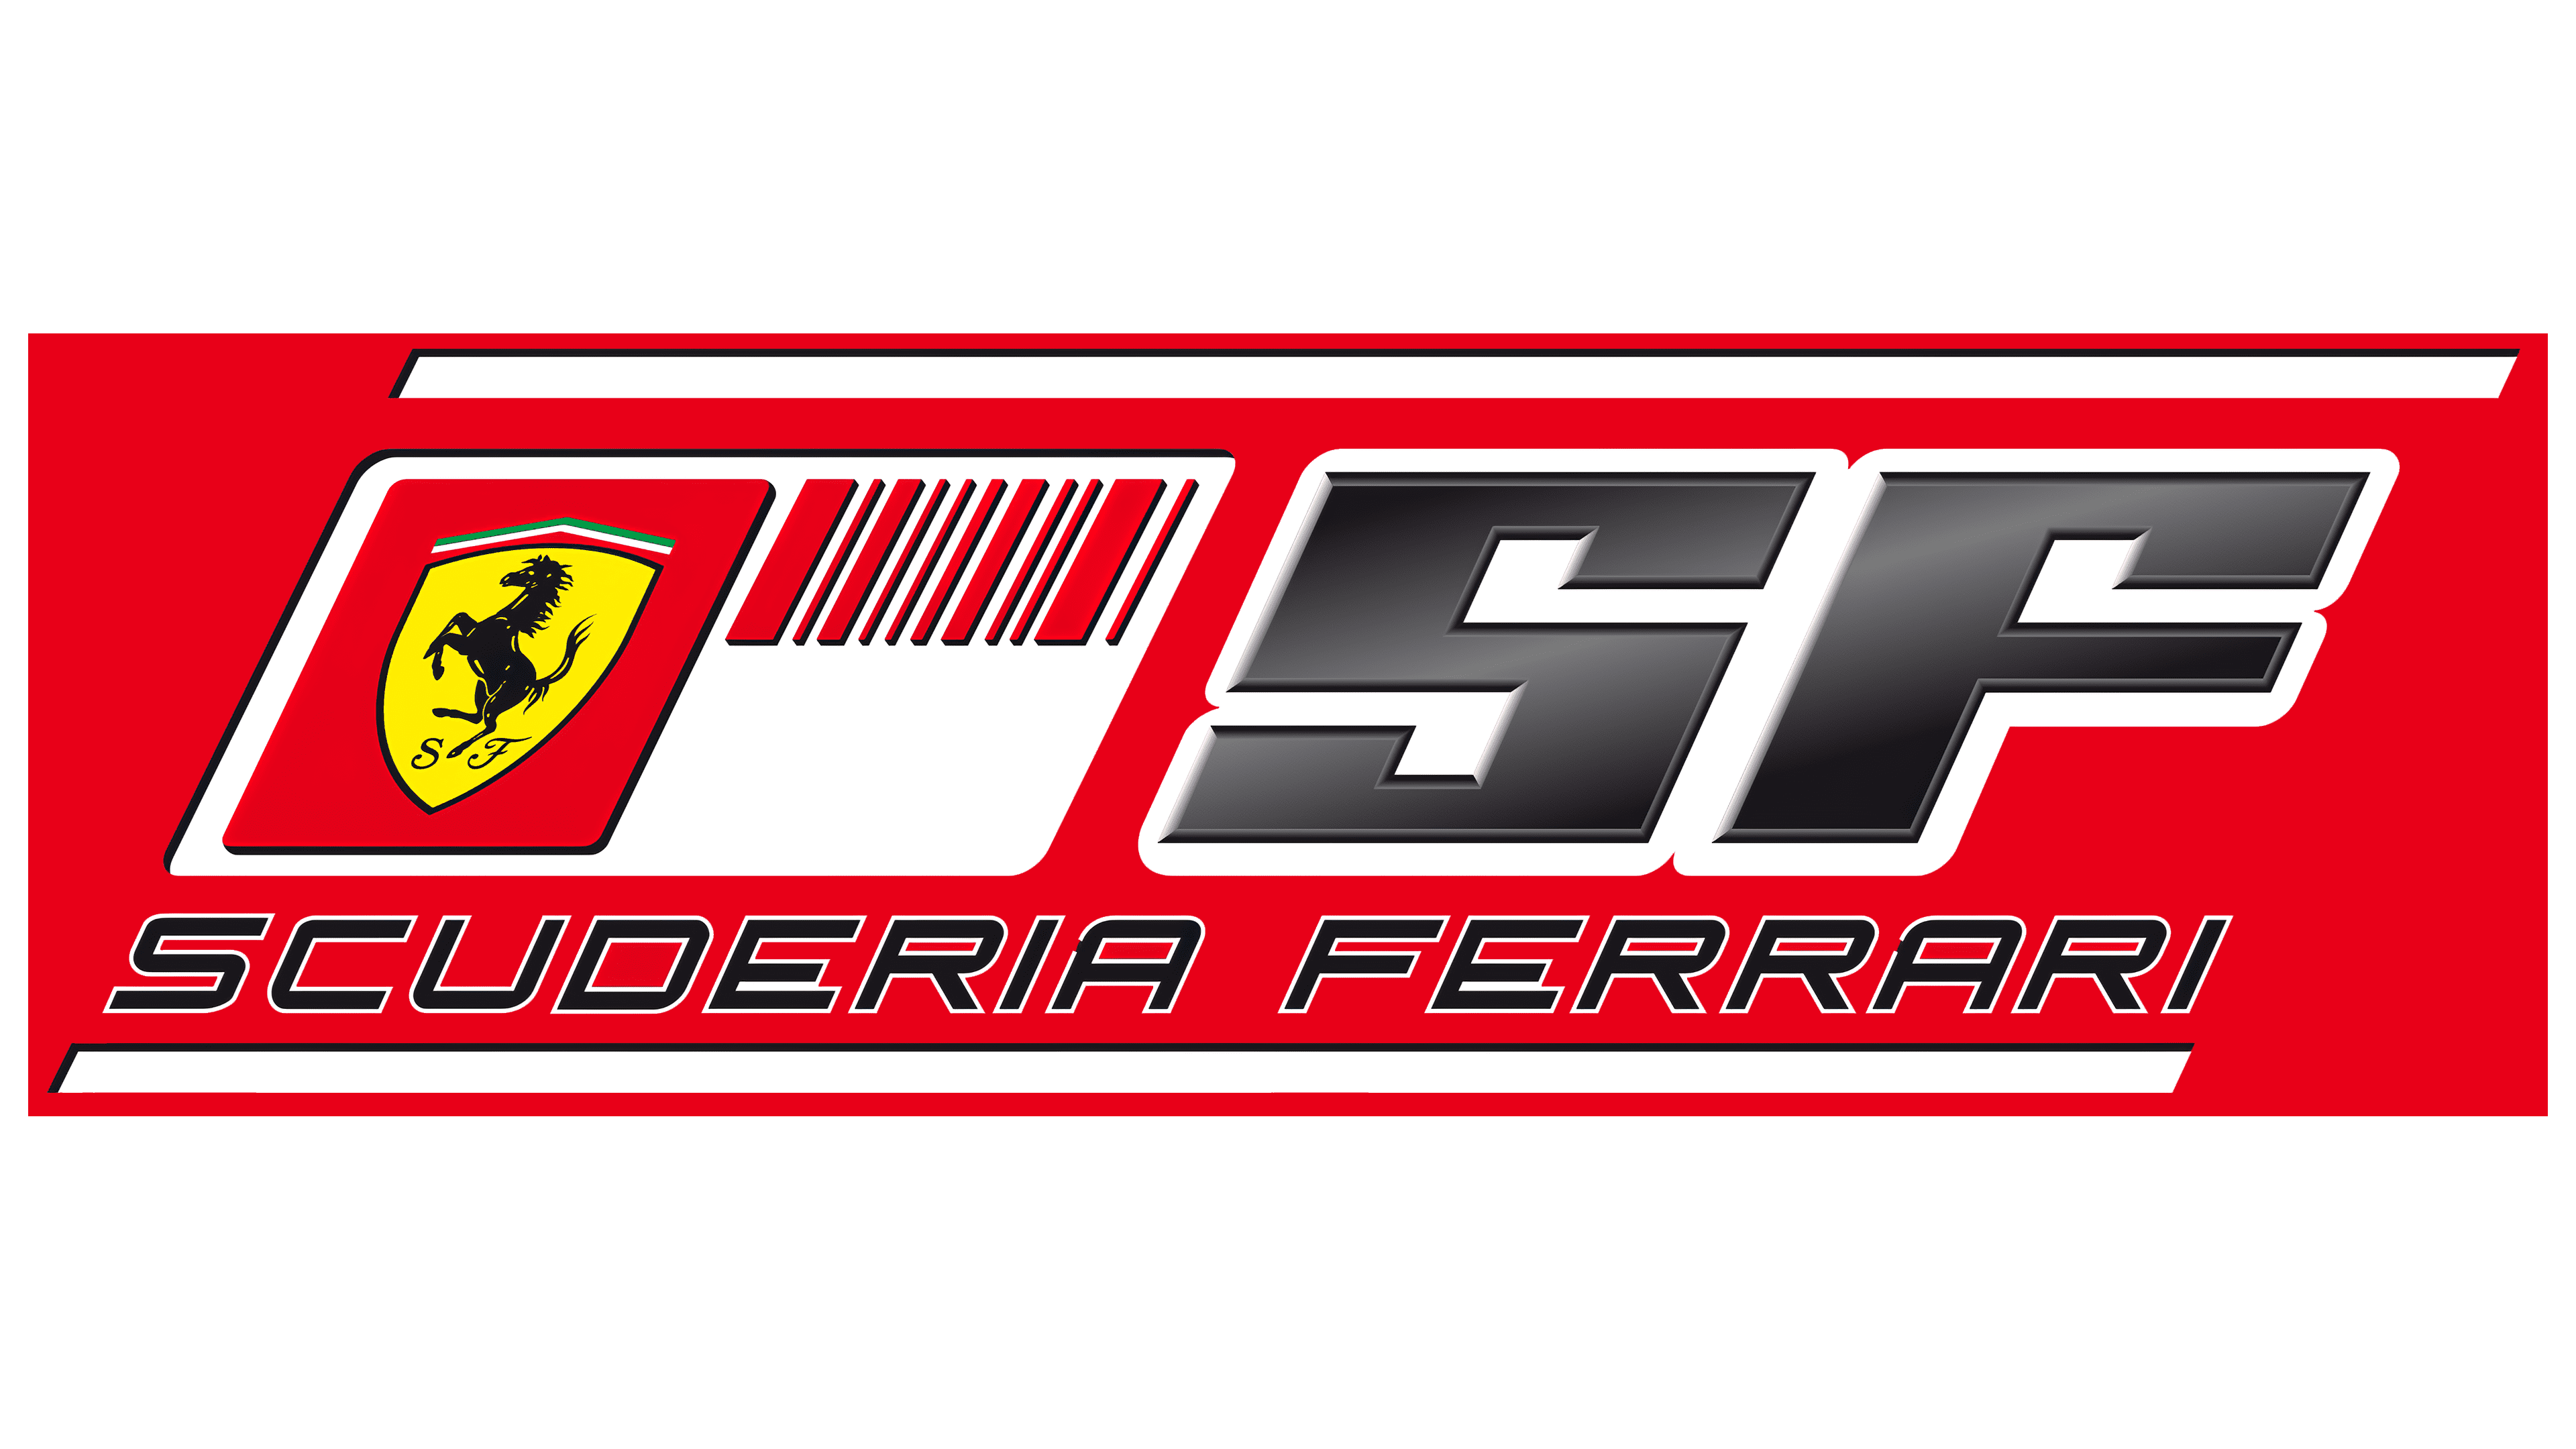 The Ferrari F1 Logo: Exploring The Scuderia Ferrari Logo